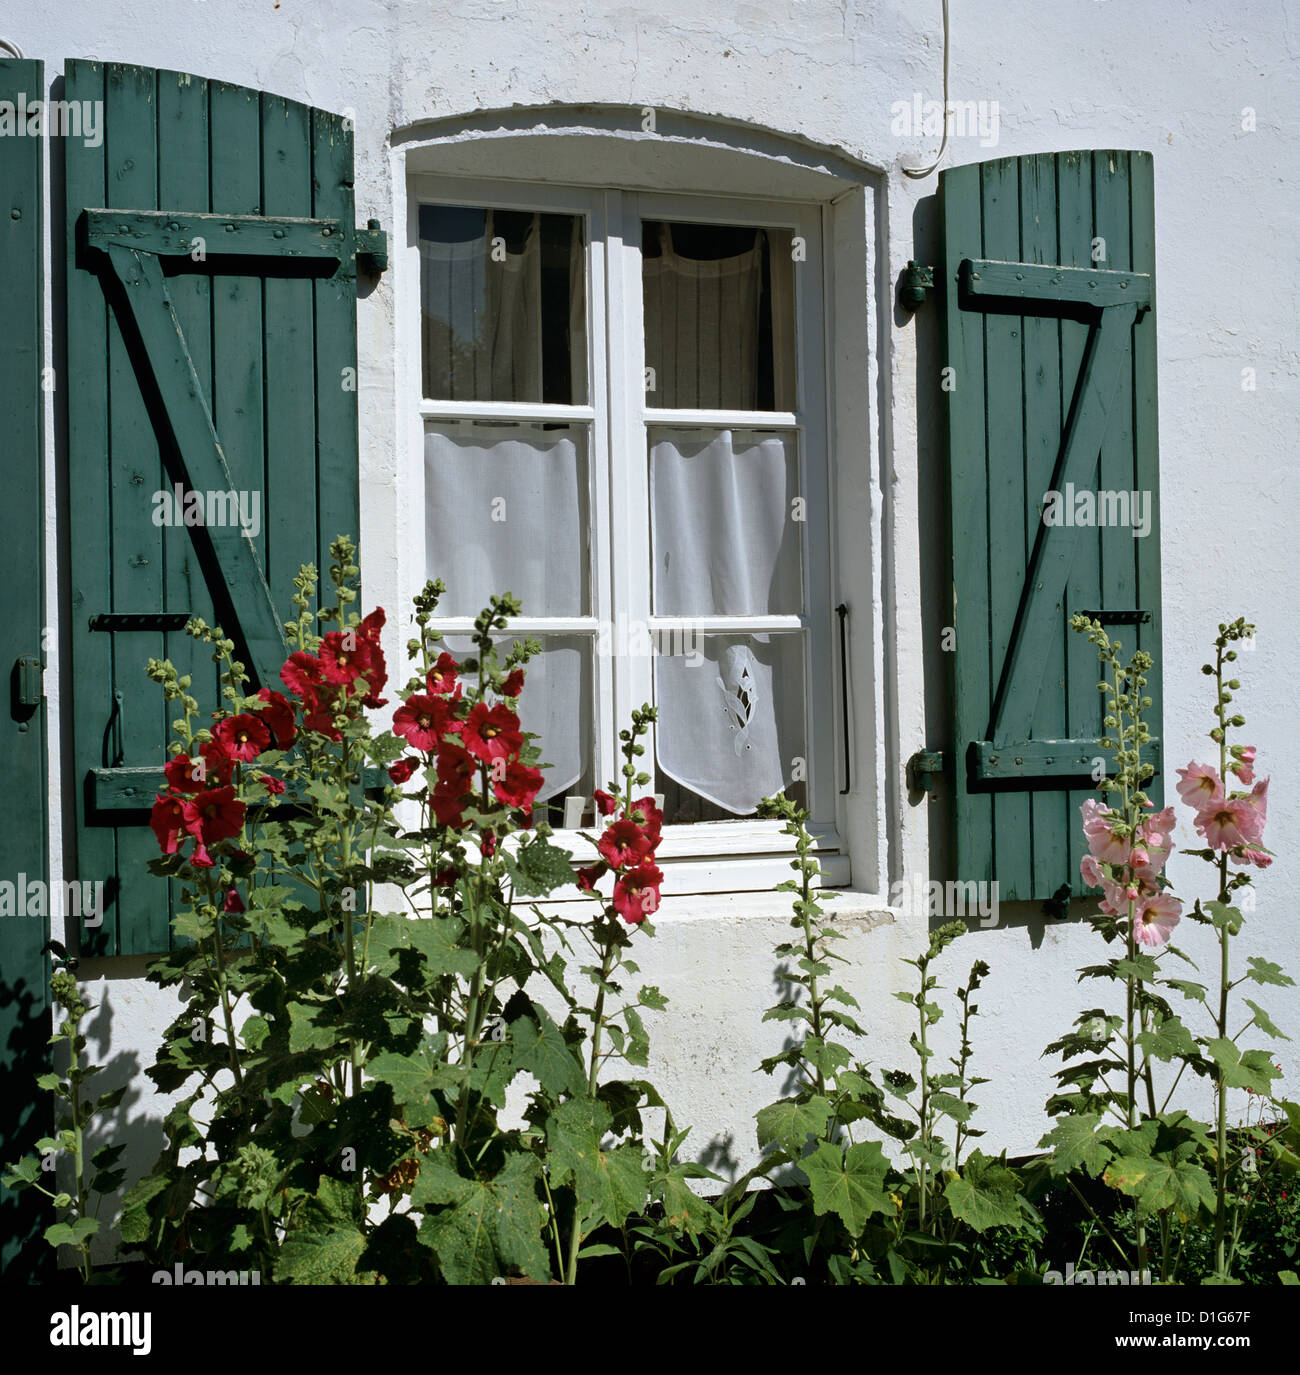 Typical scene of shuttered windows and hollyhocks, St. Martin, Ile de Re, Poitou-Charentes, France, Europe Stock Photo